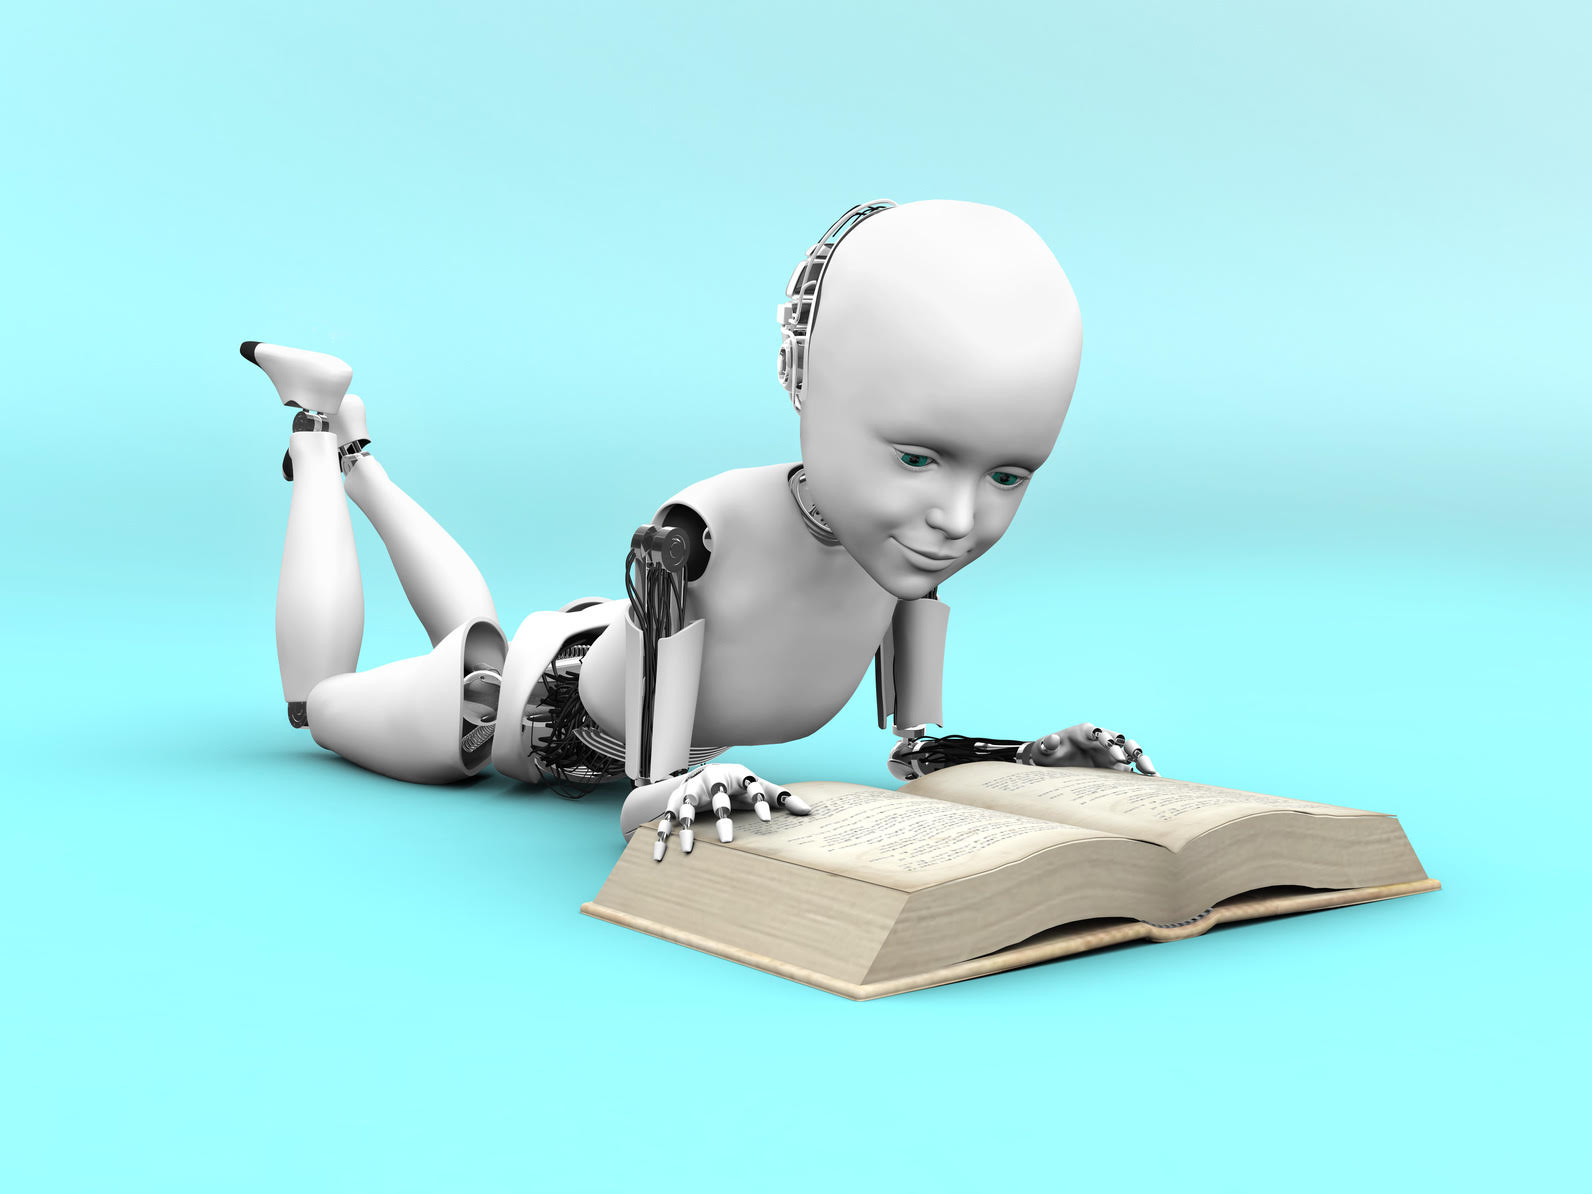 robot reading